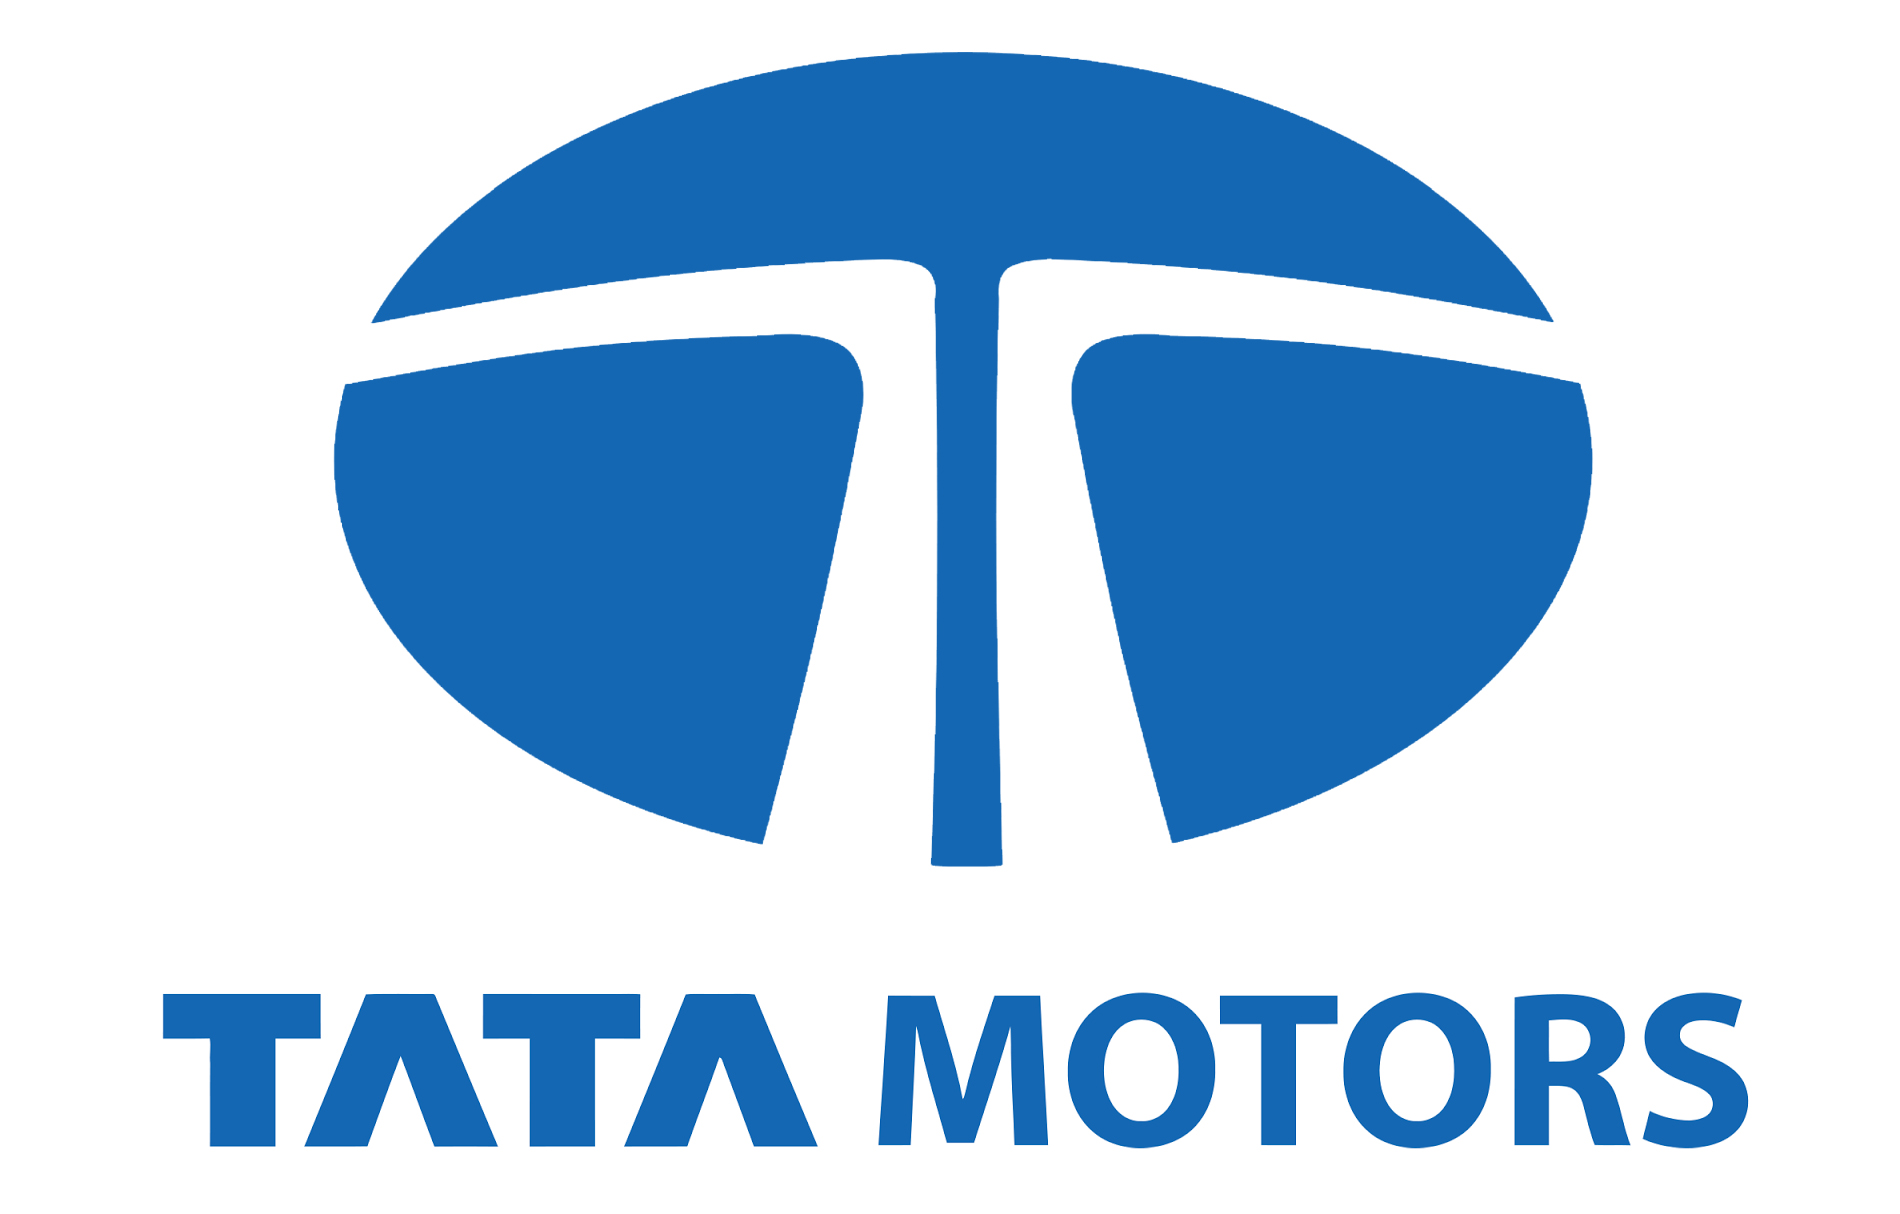 Tata Motors Cars Showroom - The True Sai Works Logo